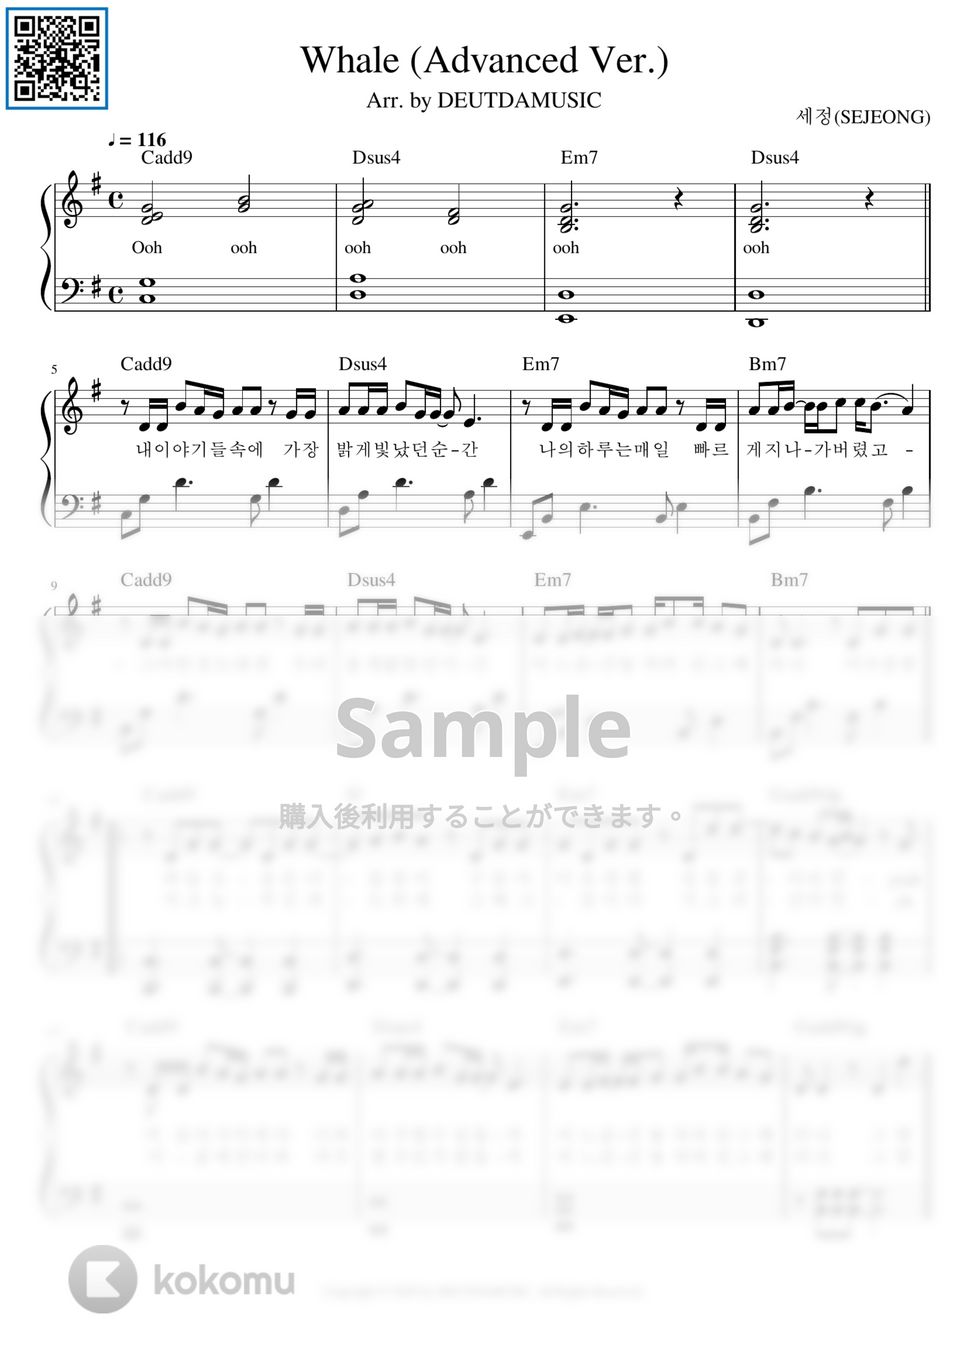 SEJEONG - Whale (中級バージョン) by DEUTDAMUSIC